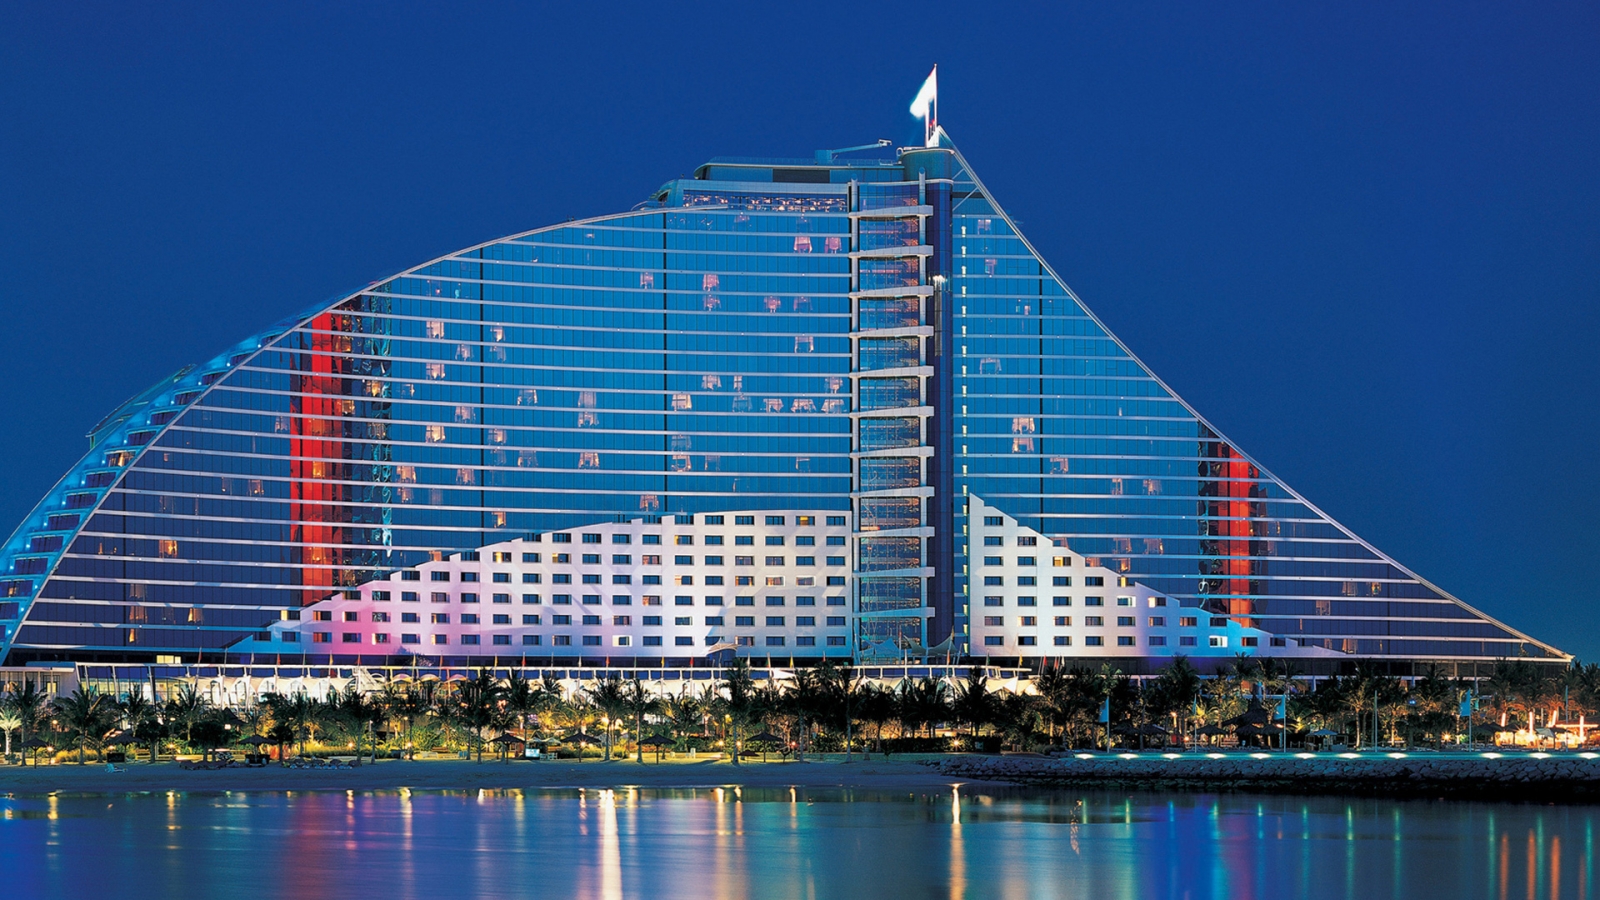 Jumeirah Beach Hotel Dubai for 1600 x 900 HDTV resolution